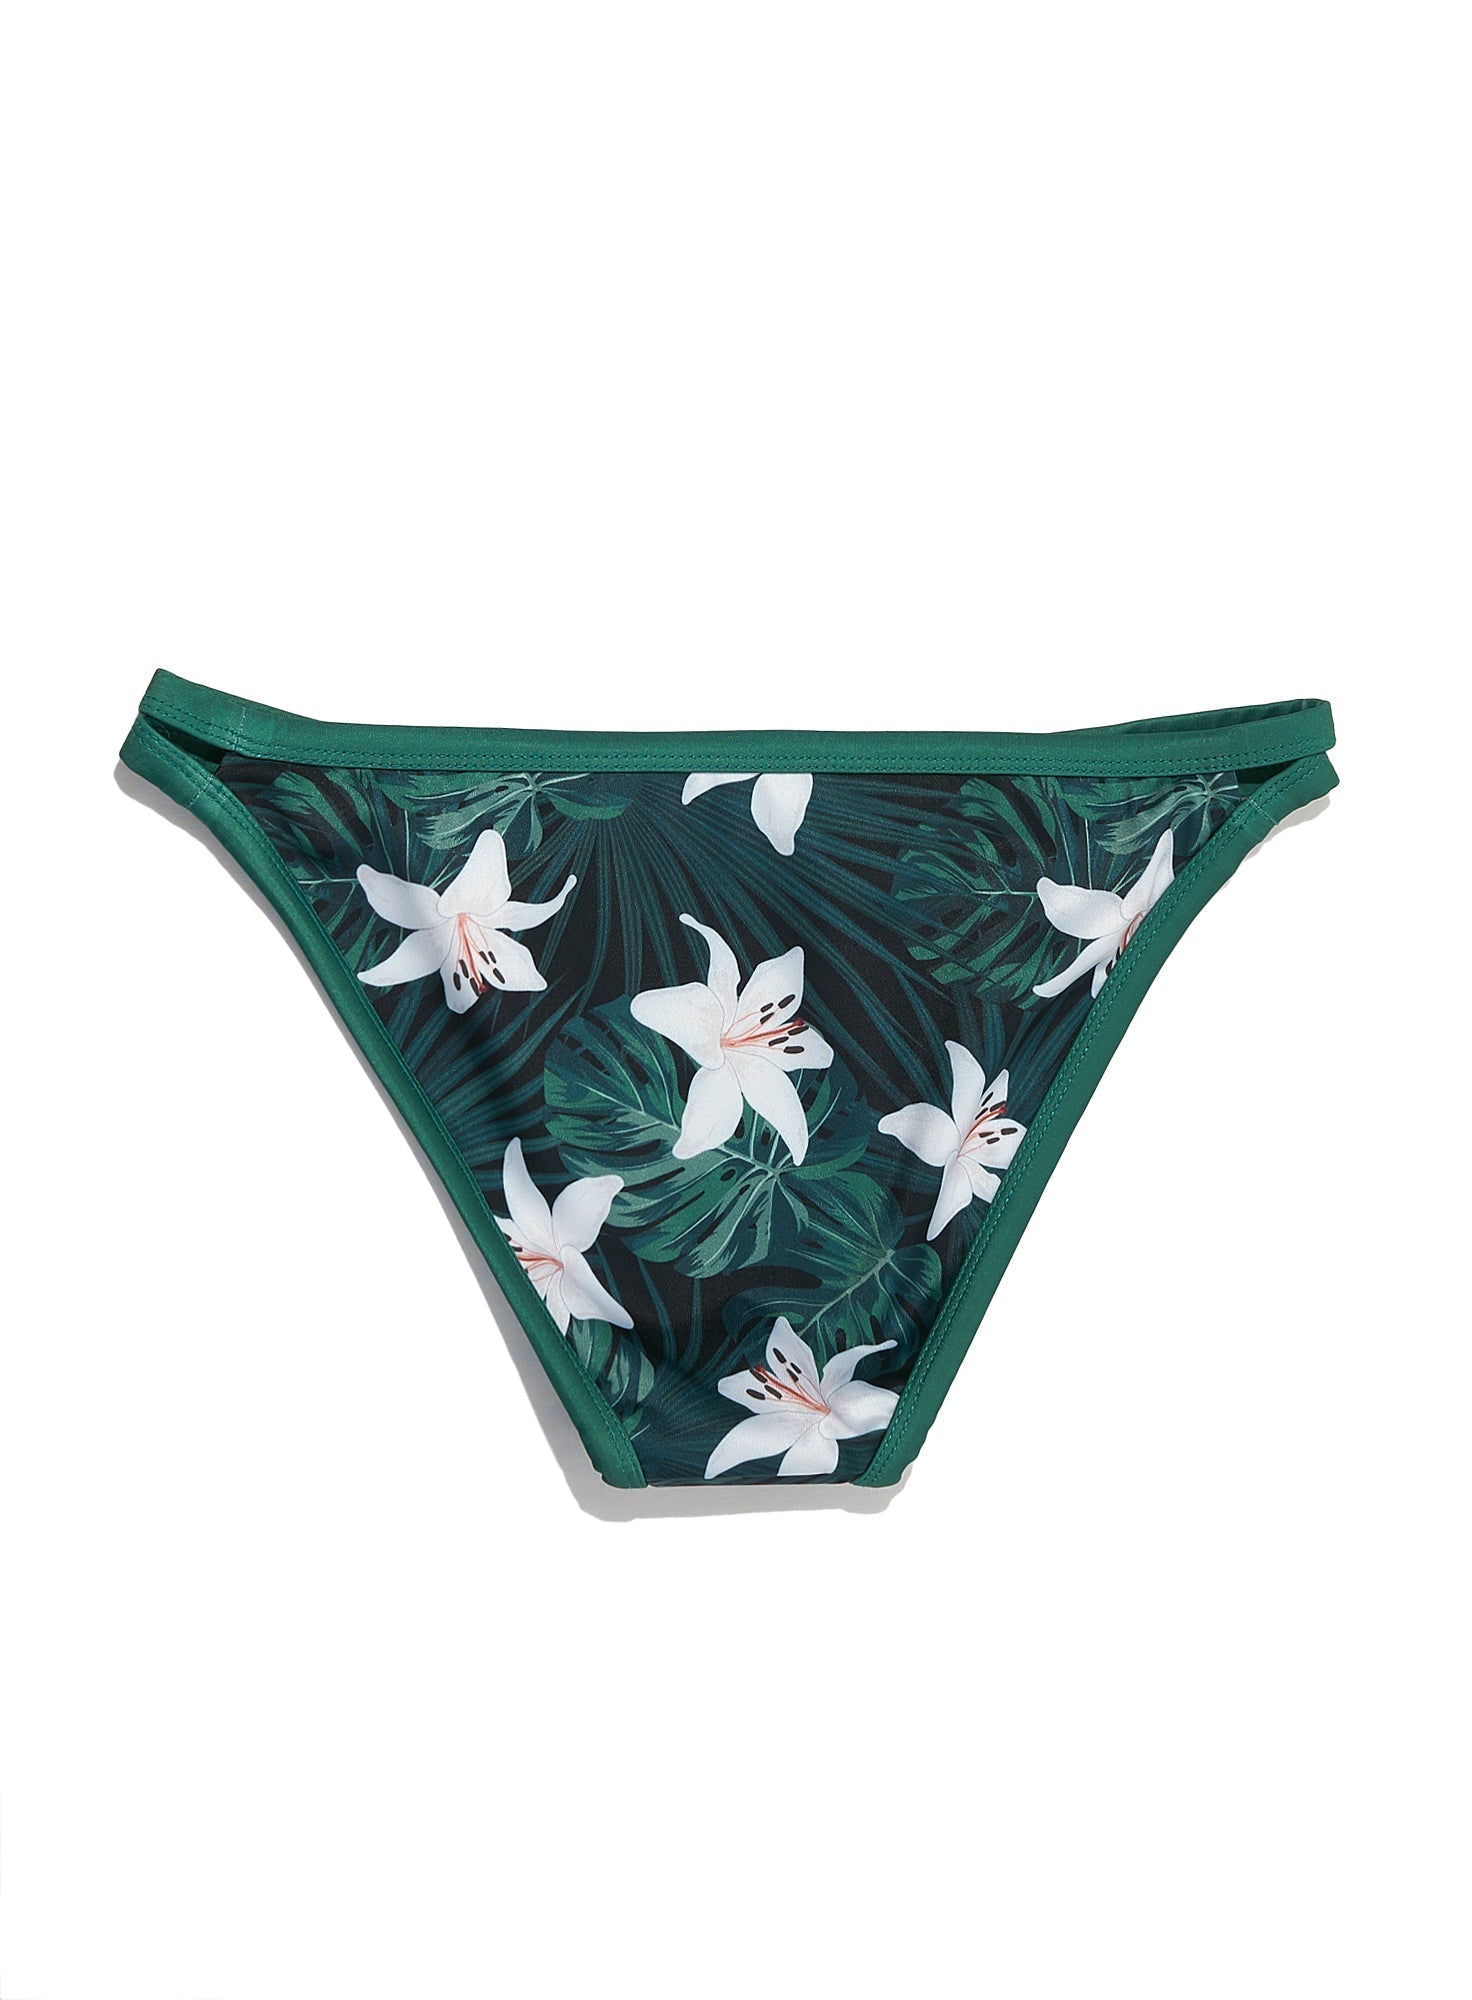 Jojo Green/Midnight Jungle Print Reversible Bikini Bottom-Yindi & Salt-stride